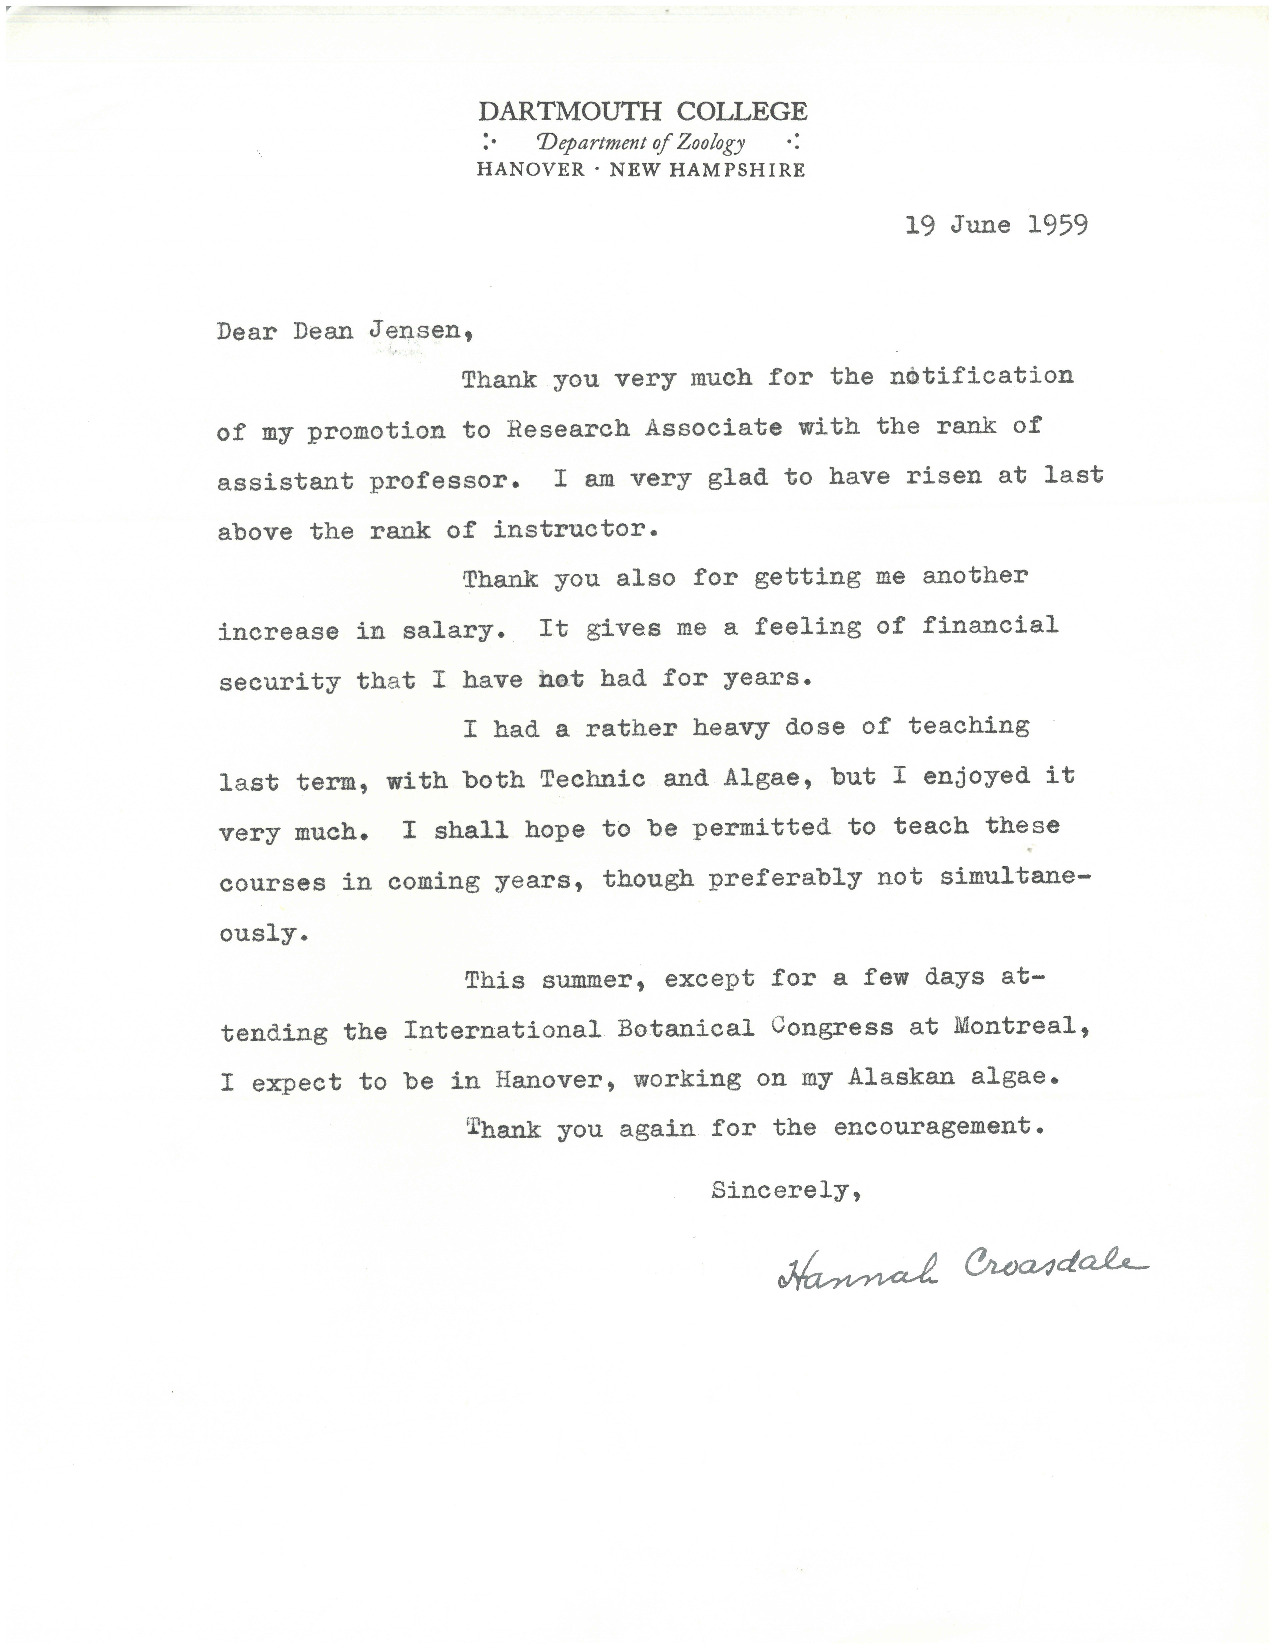 Letter from Hannah Croasdale to Arthur Jensen, Jun. 19, 1959